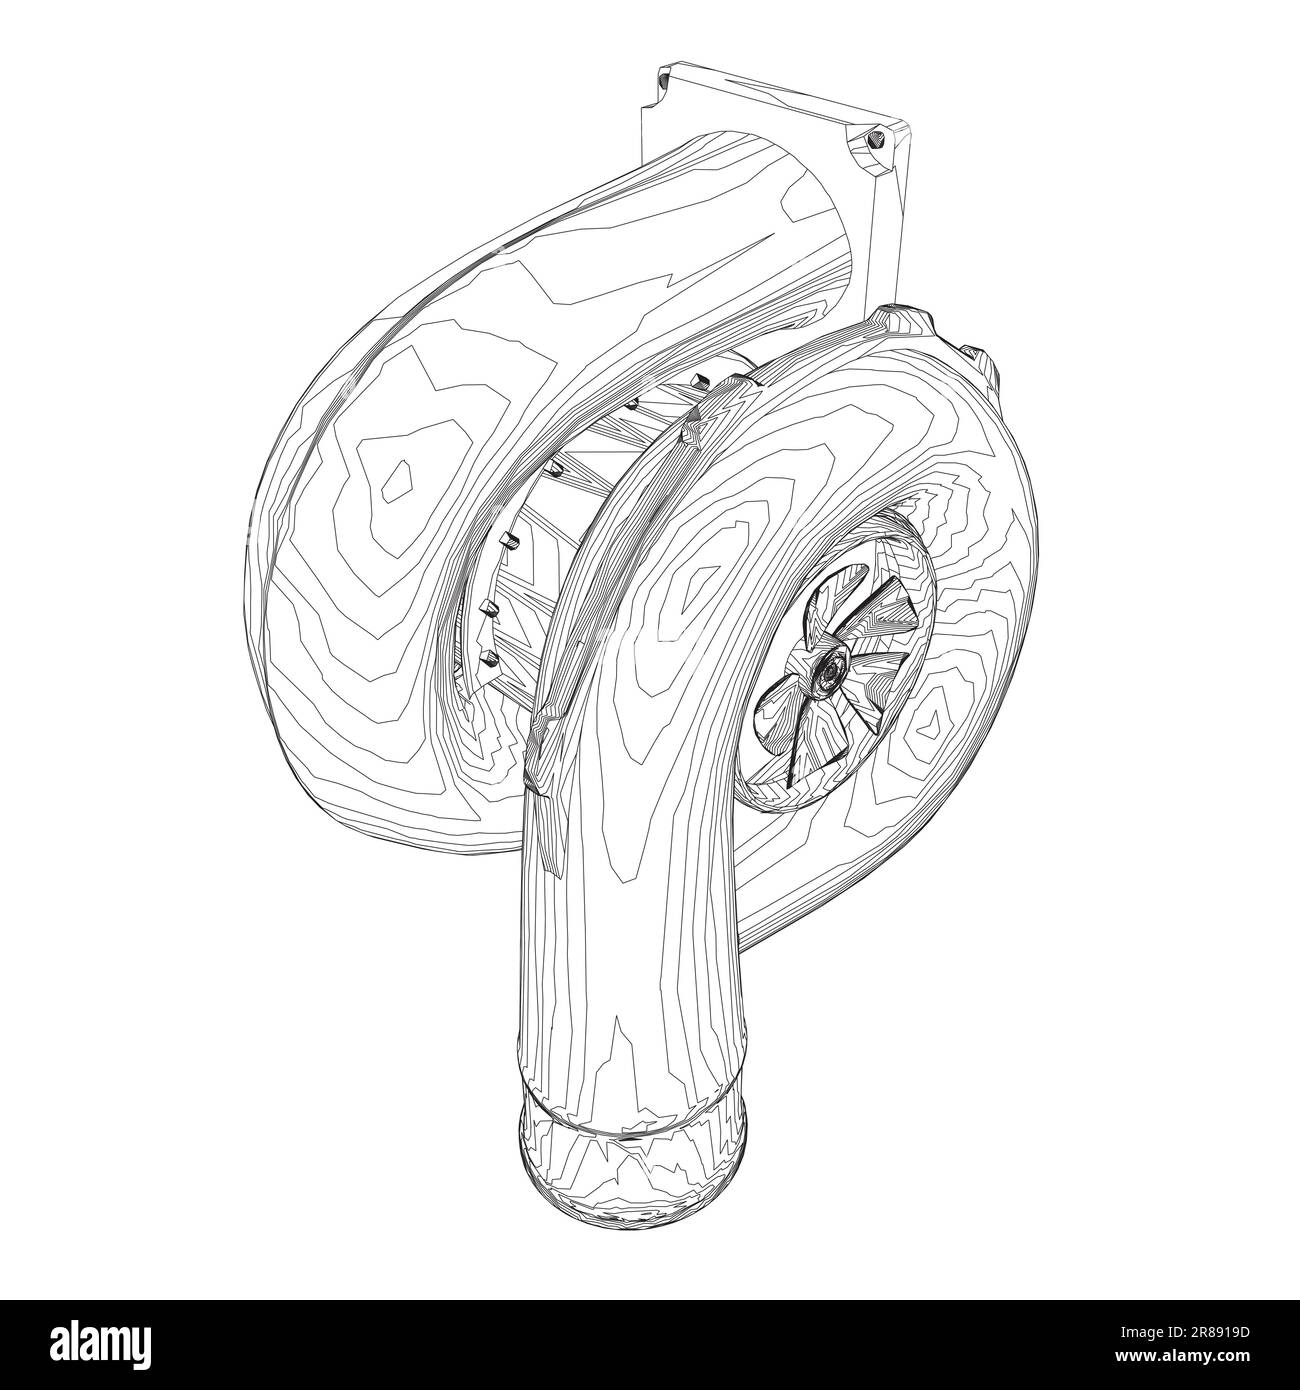 Steam turbine rotor operation. Vector illustration. Automotive turbine outline. Stock Vector